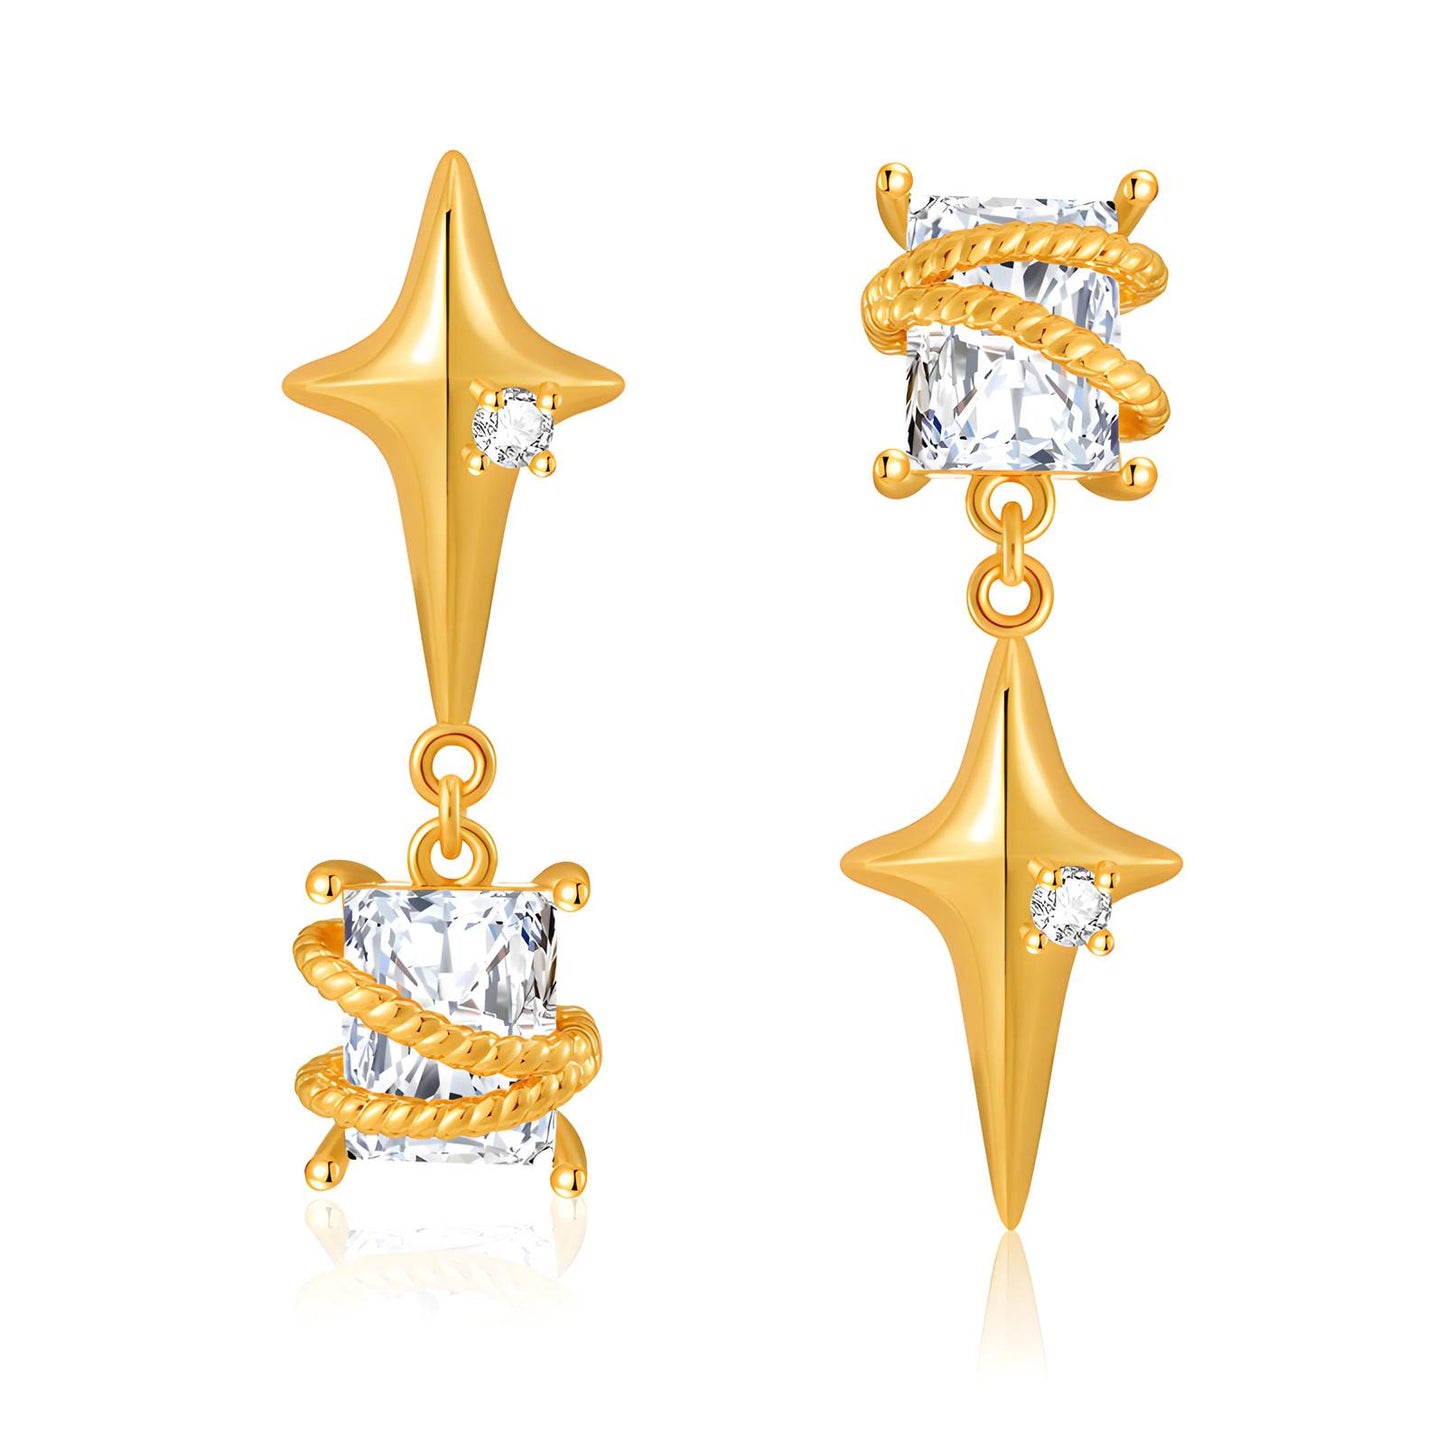 18K gold plated Stainless steel  Star earrings, Intensity